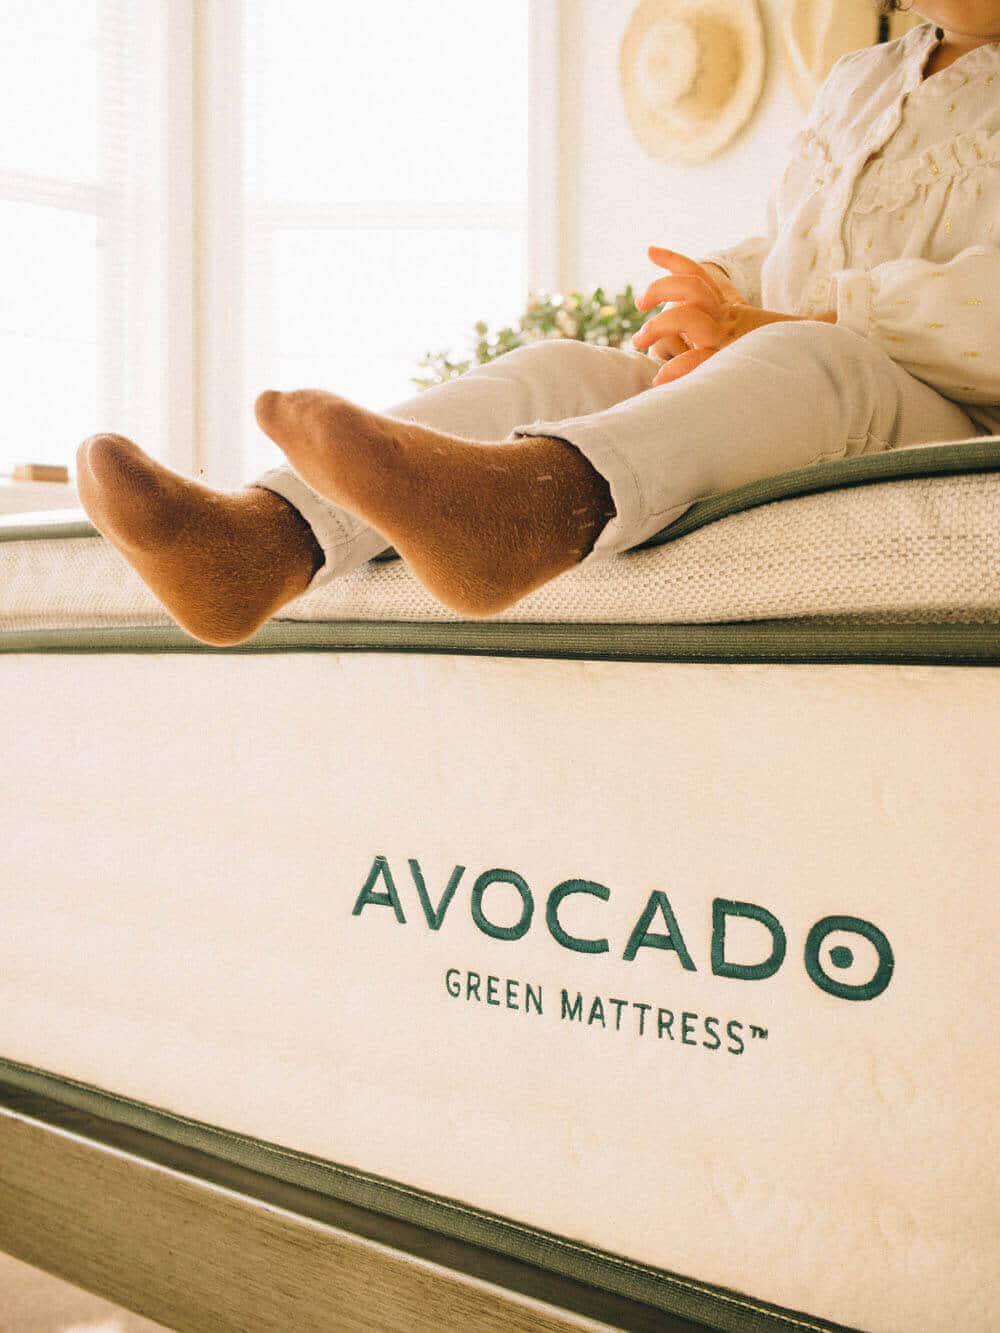 A natural and non-toxic mattress from Avocado Green Mattress